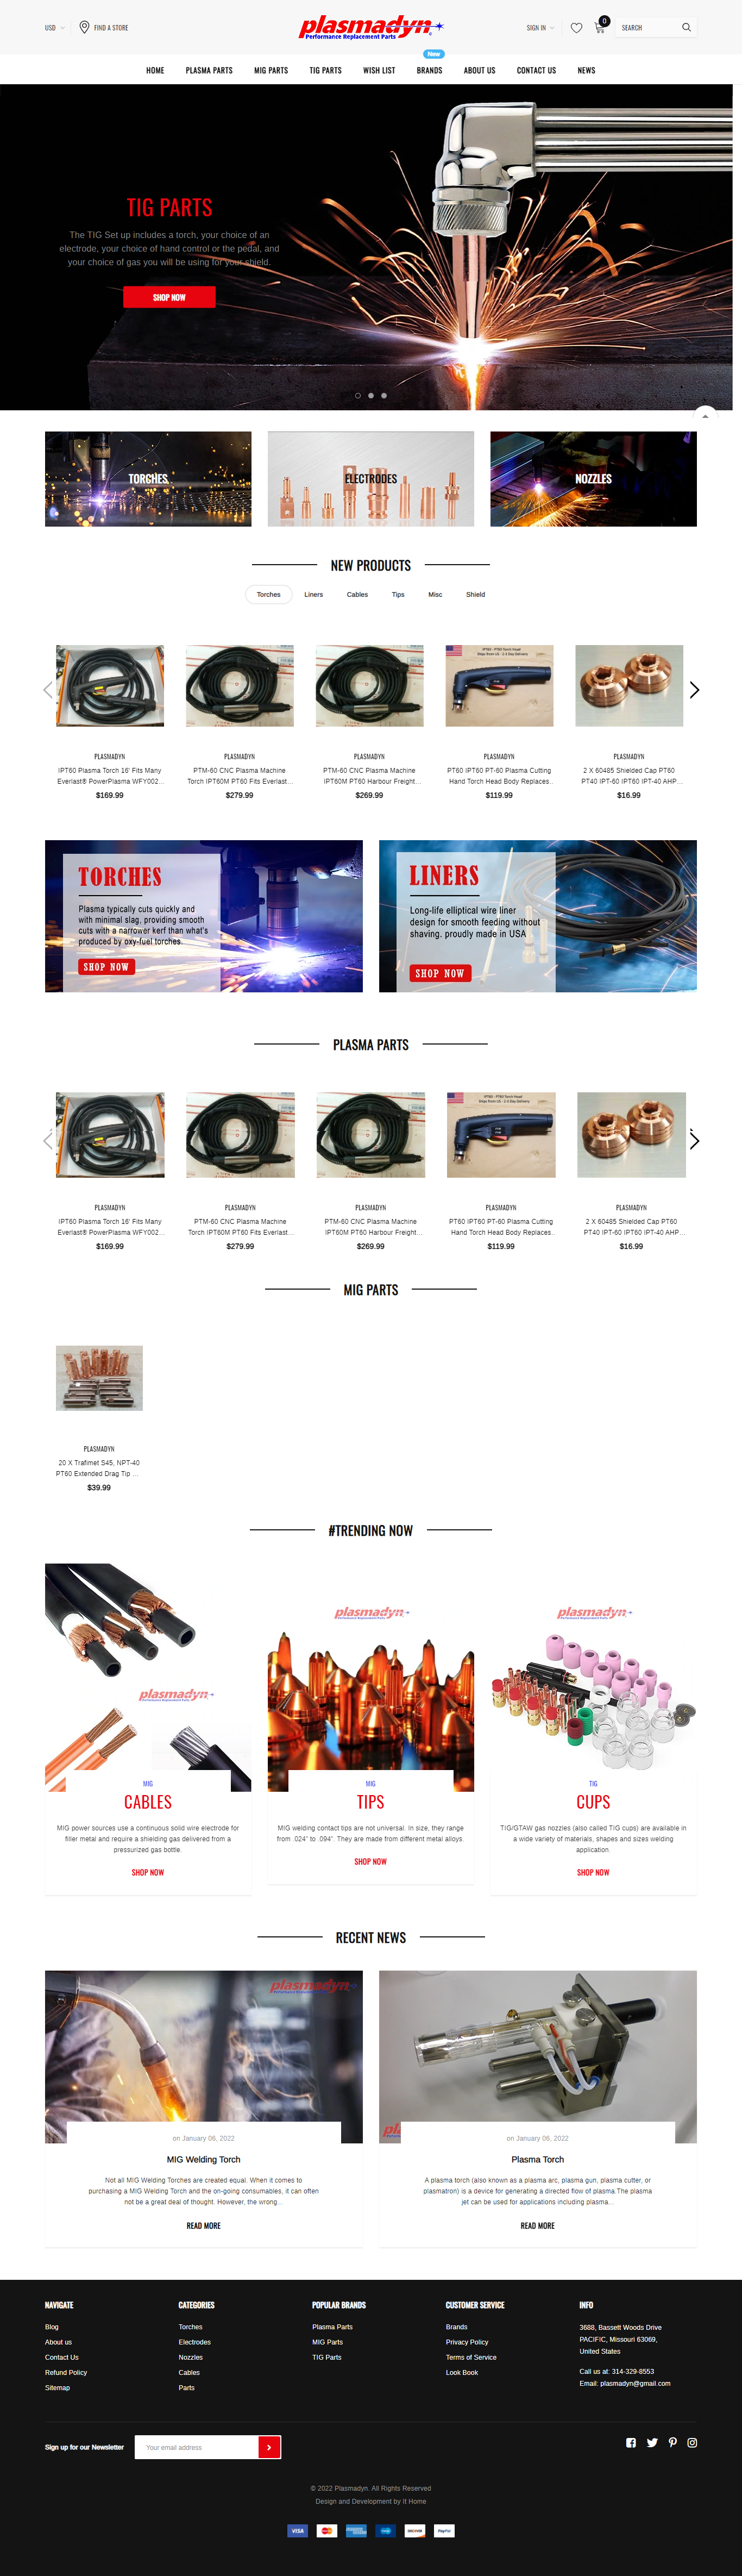 Plasmadyn Modern shopify Ecommerce website